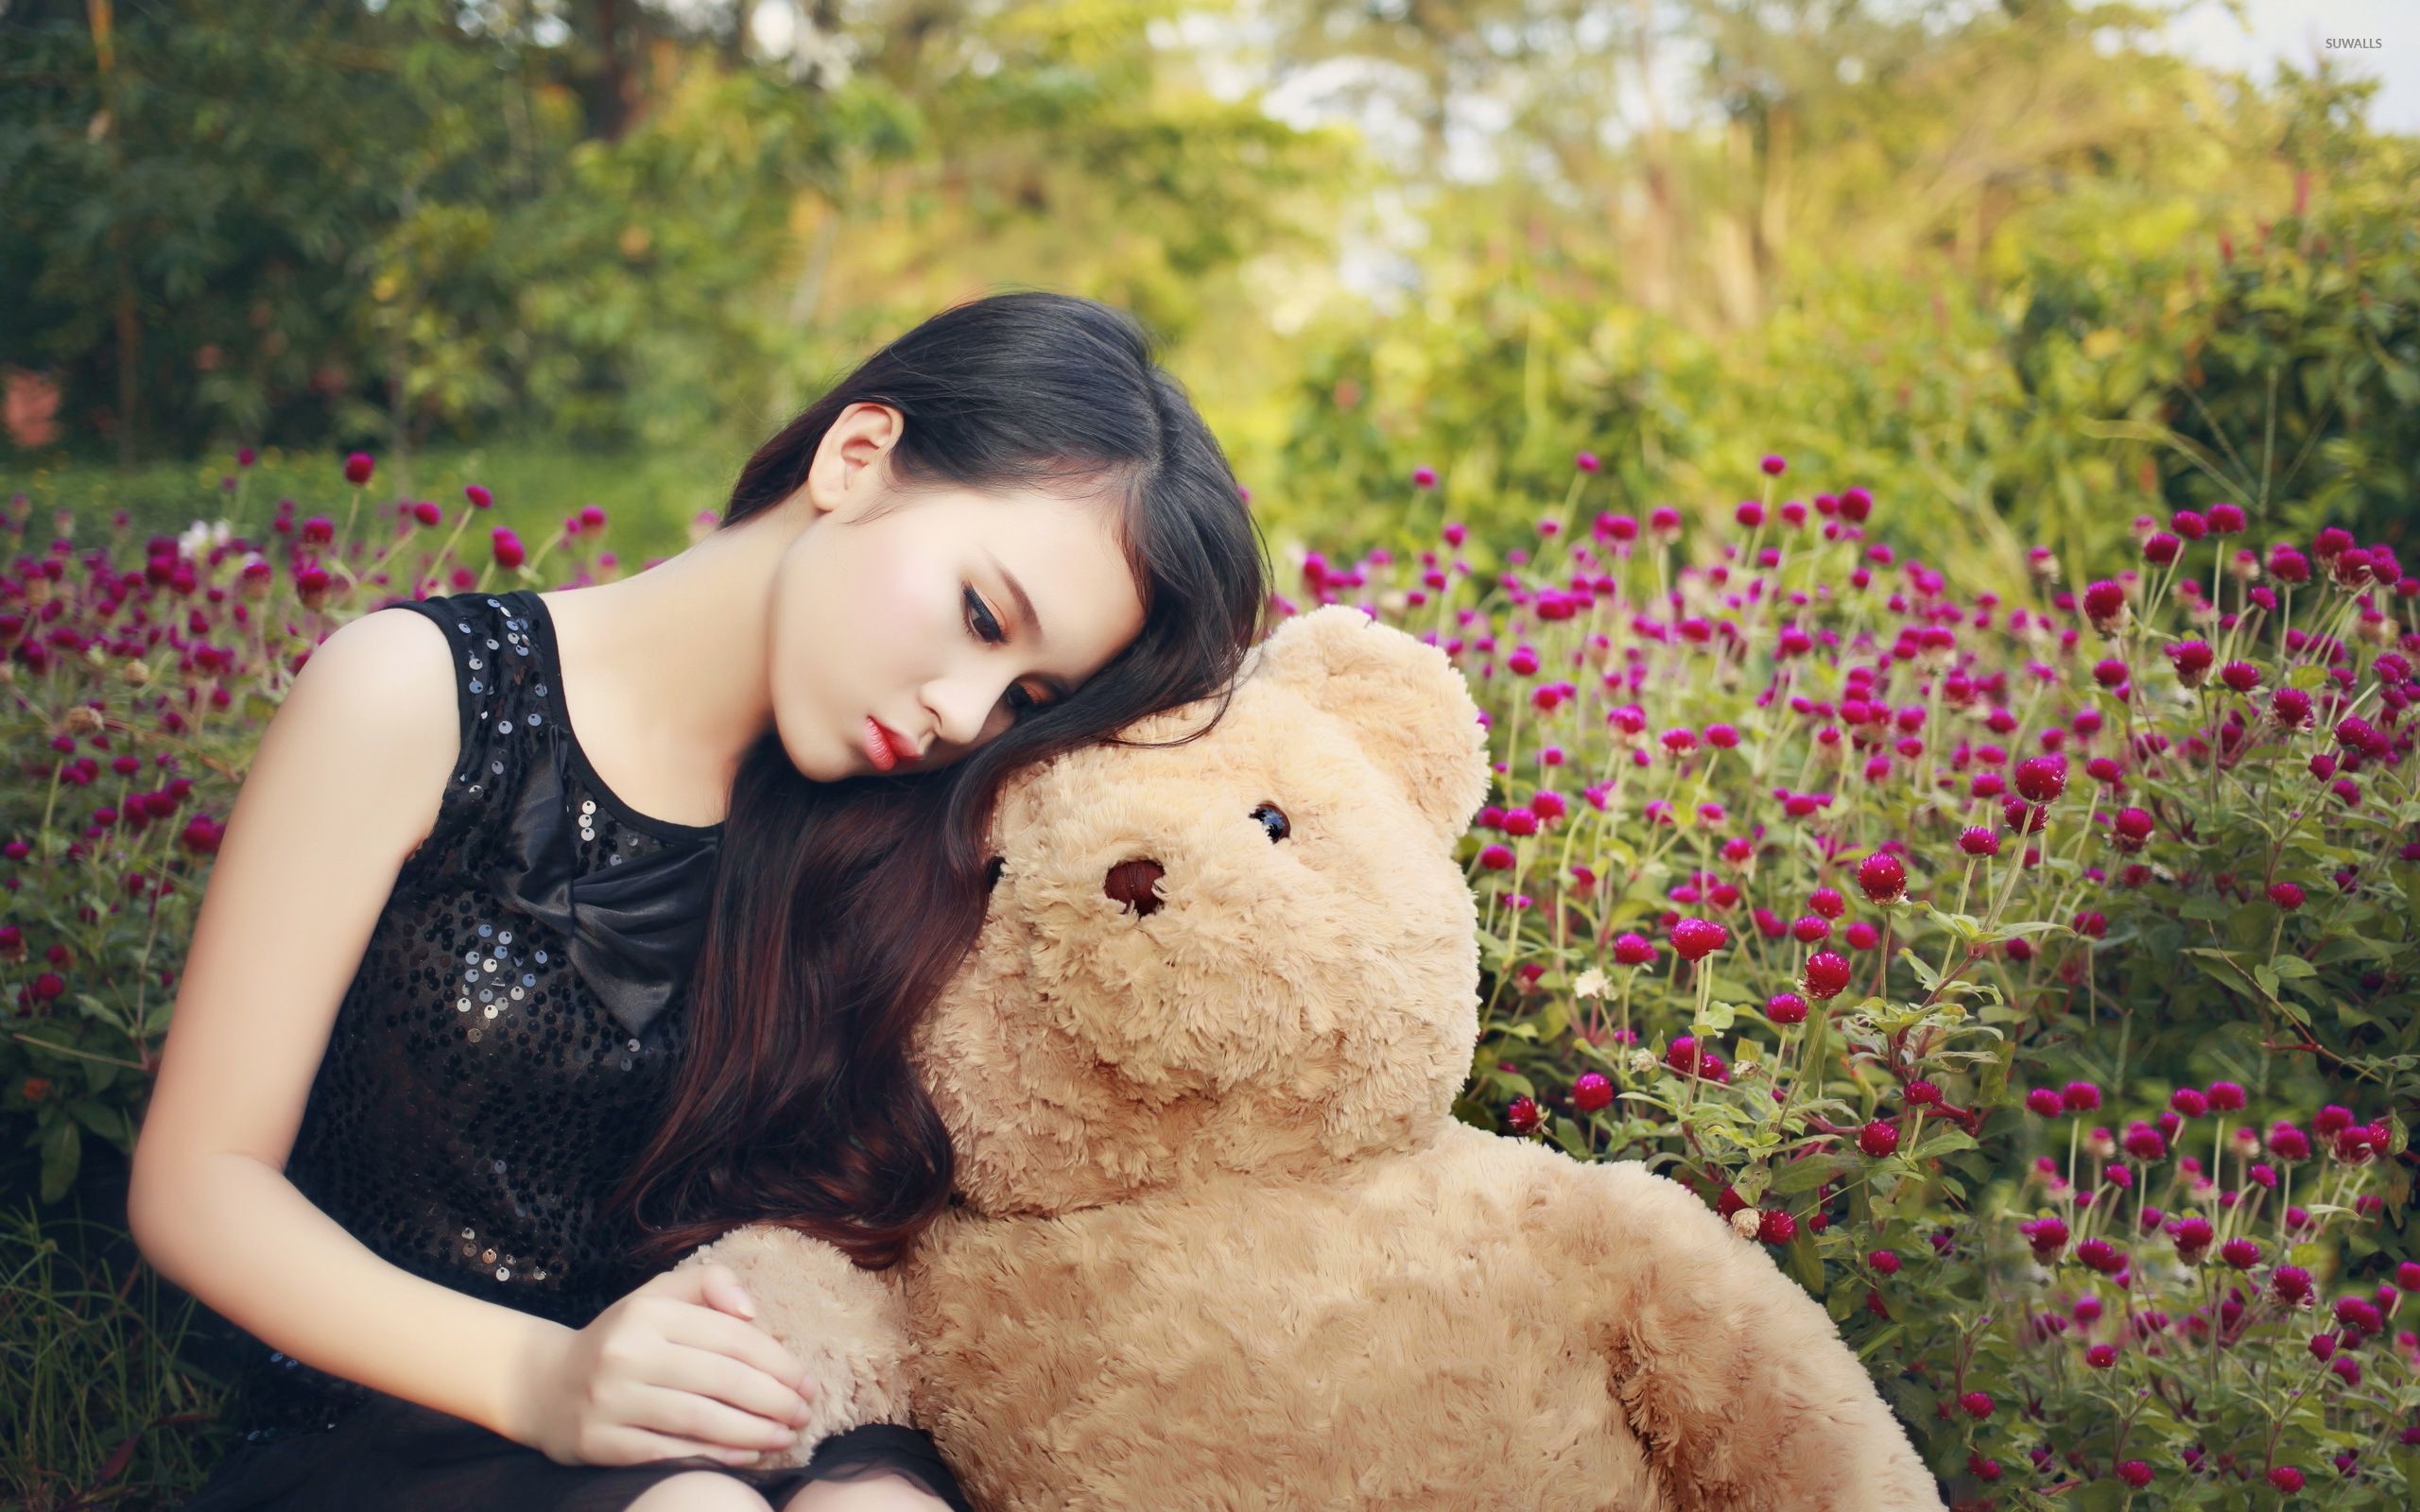 2560x1600 Cute asian girl with a teddy bear wallpaper